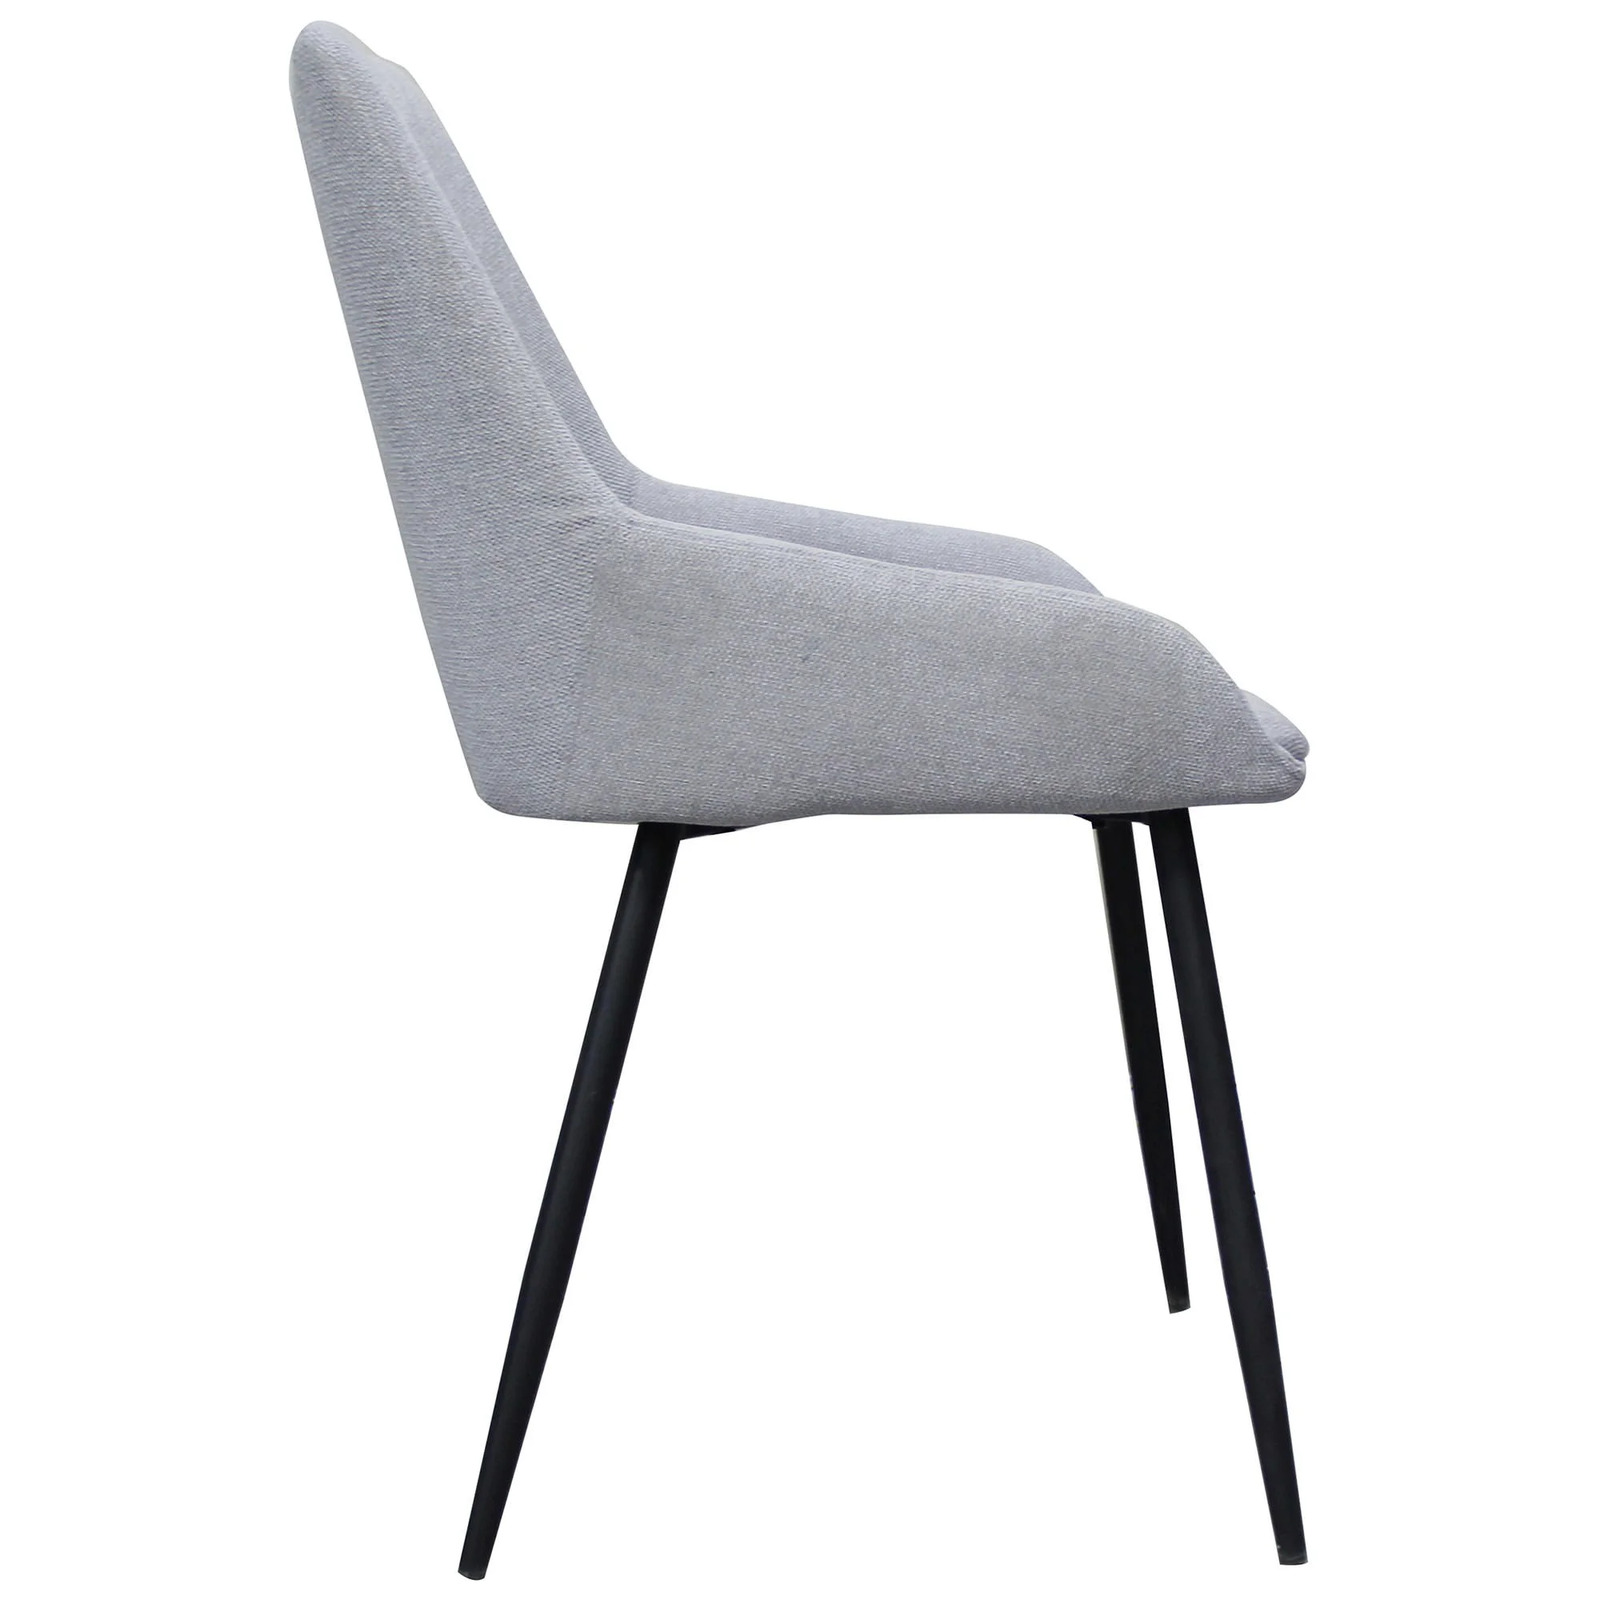 Set of 2 Dane Fabric Dining Chair, Light Grey